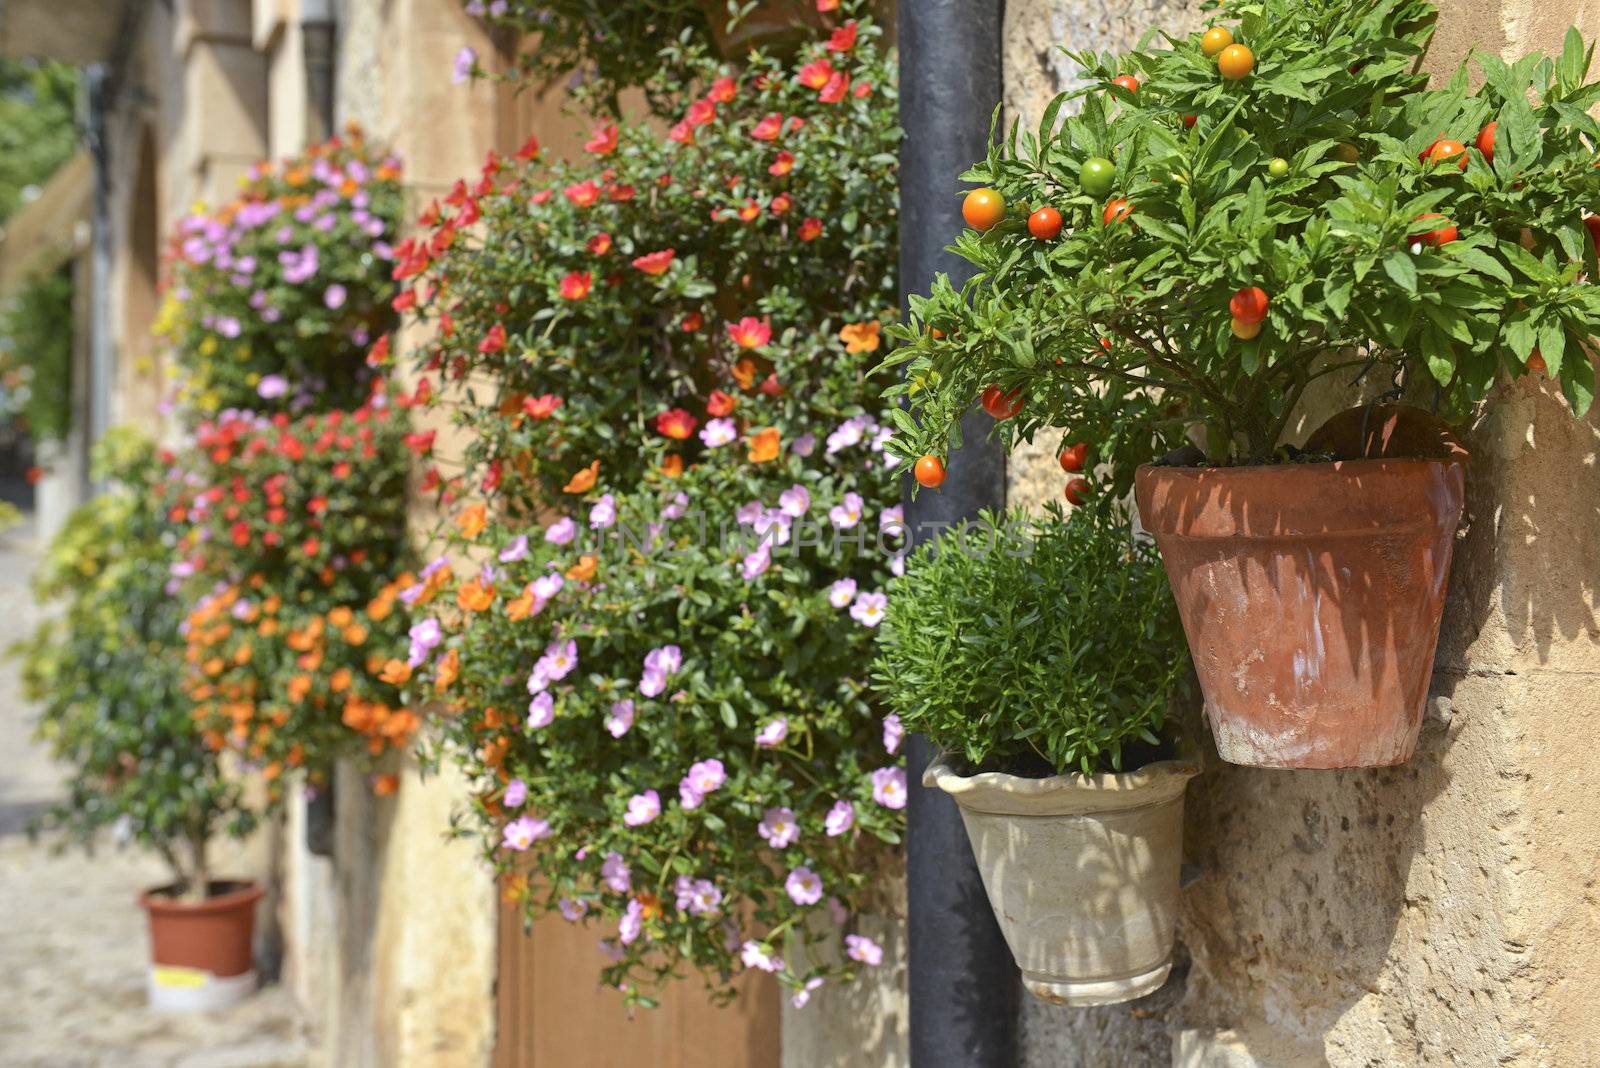 Typical Mediterranean Village with Flower Pots in Facades in Val by Rainman